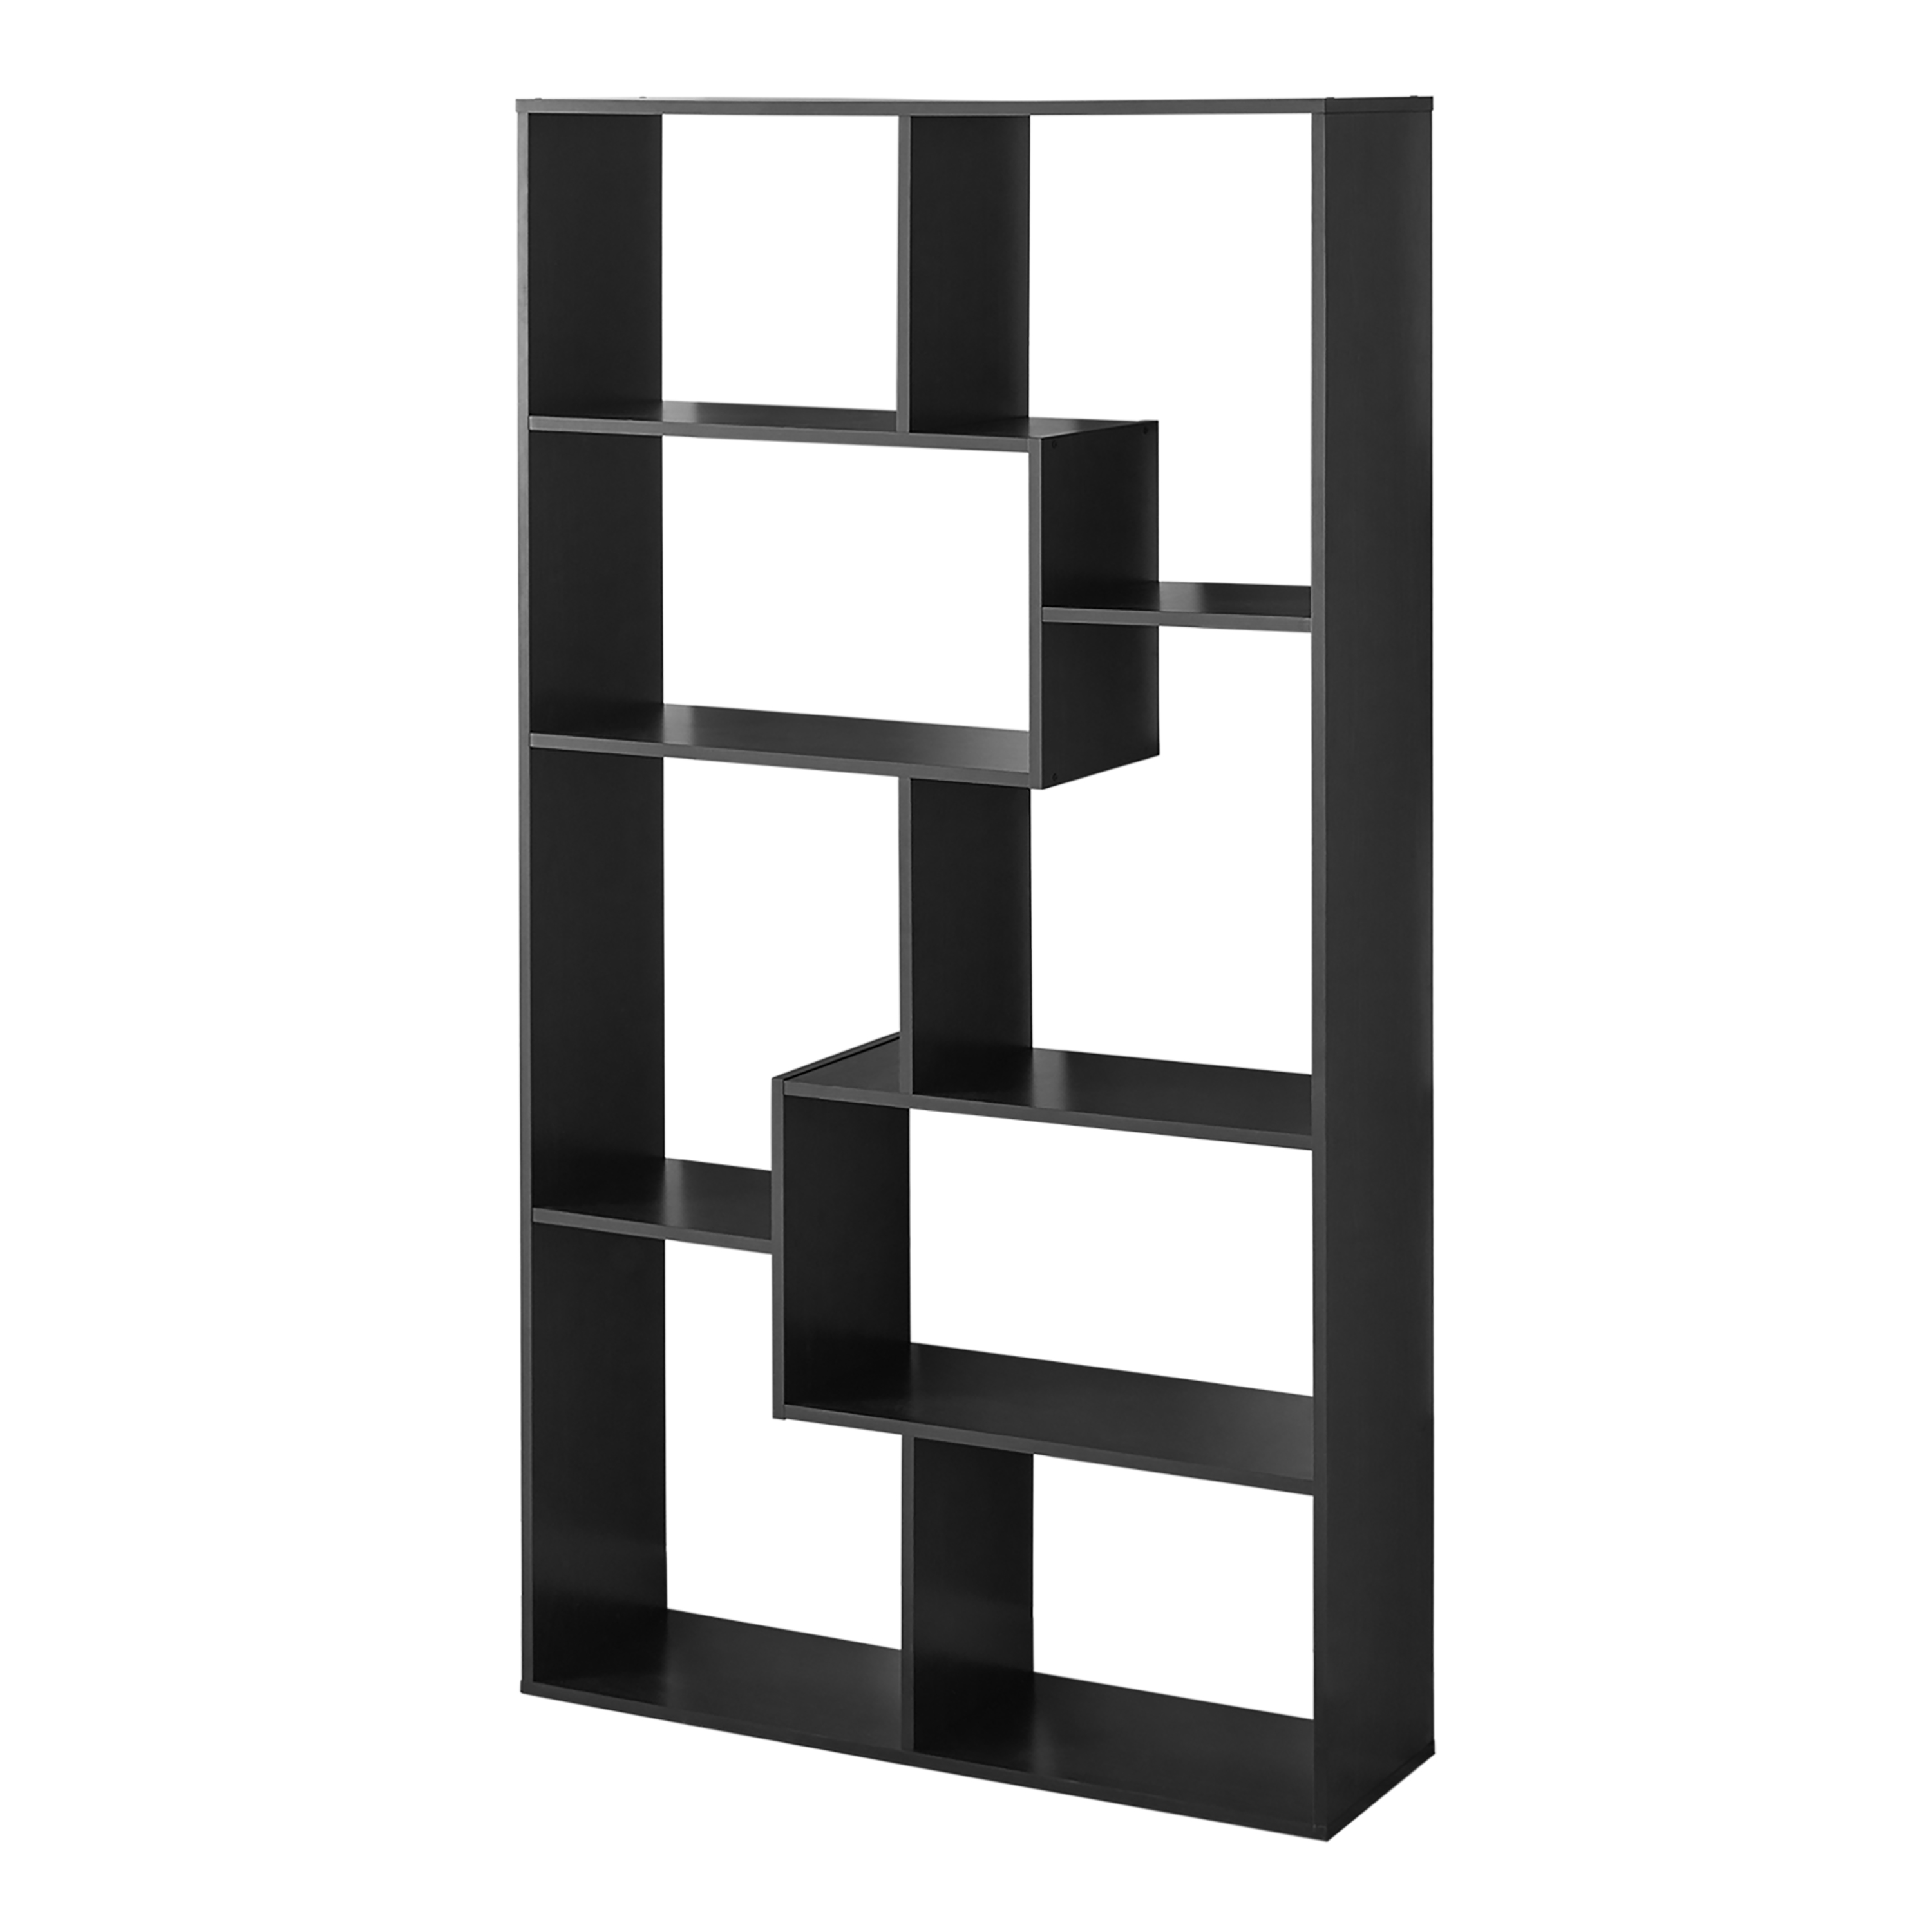 Mainstays Modern 8-Cube Bookcase, Espresso - image 2 of 5